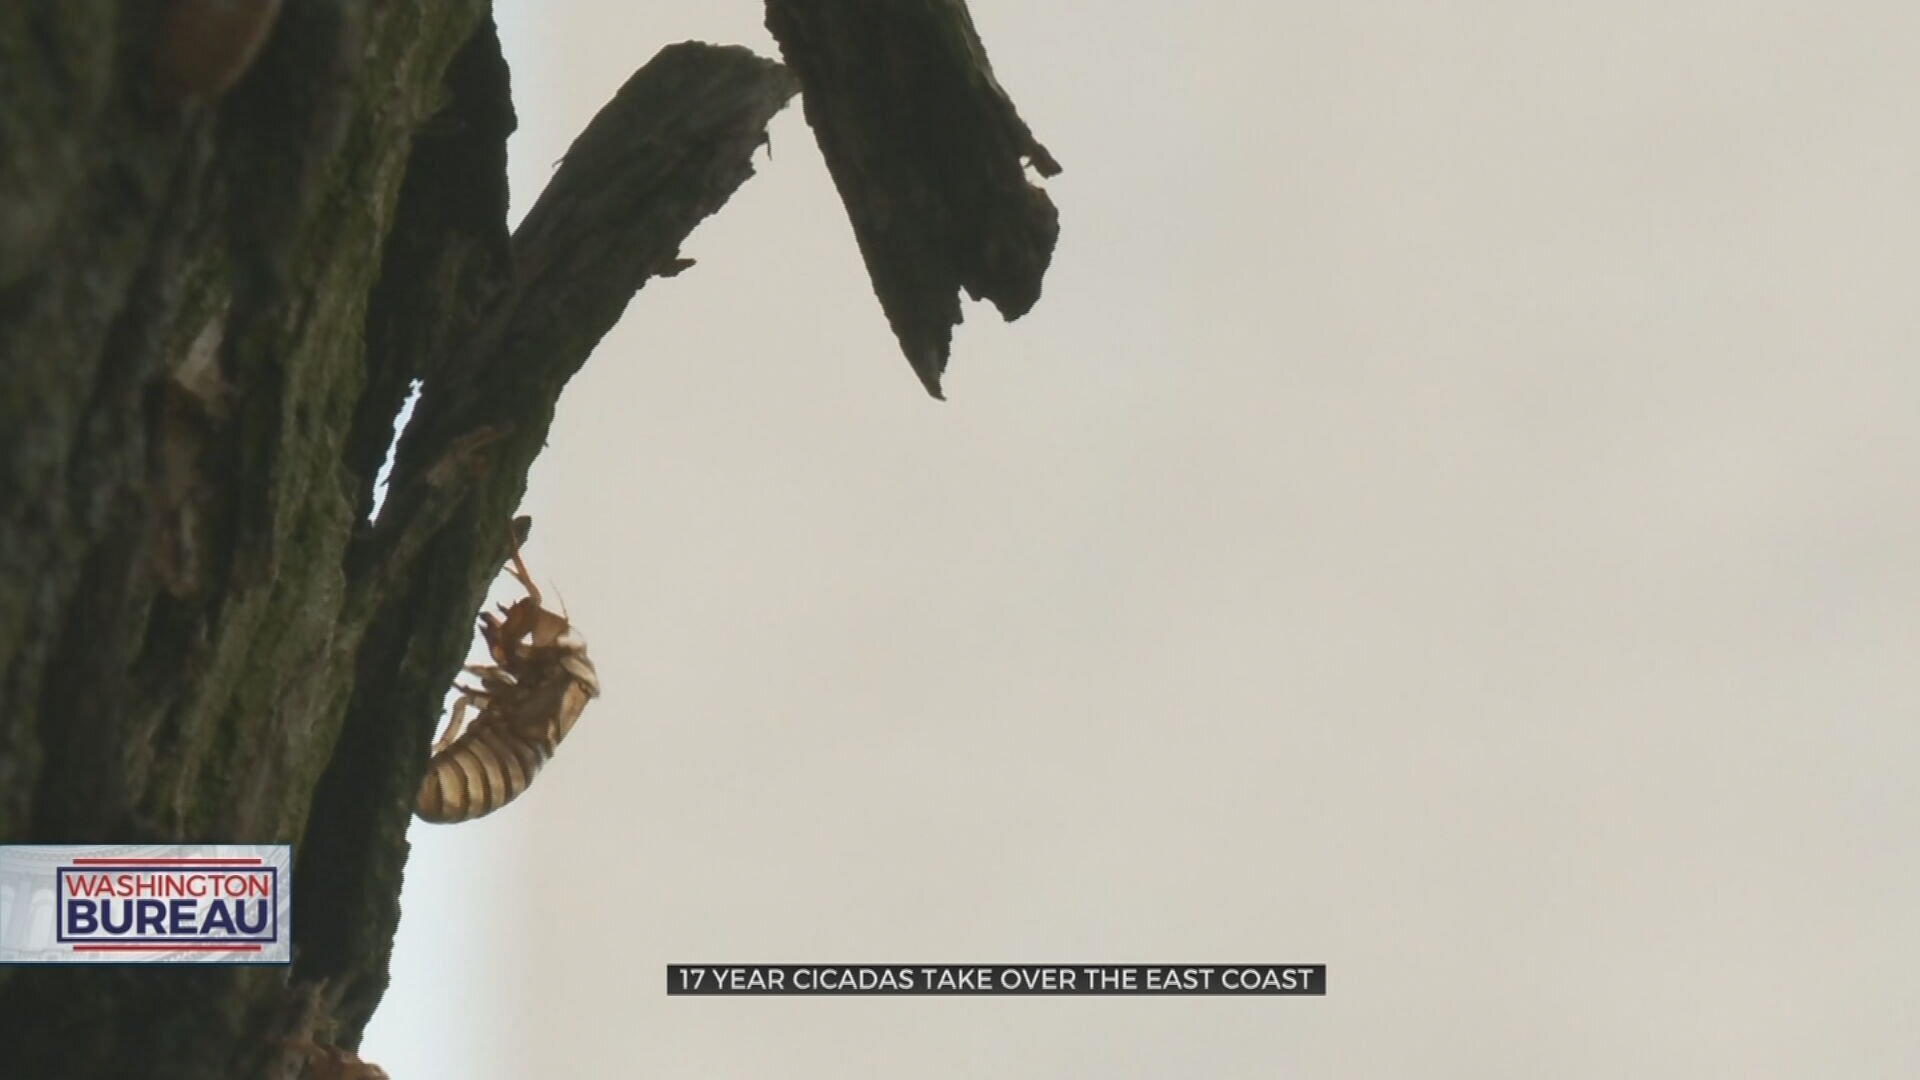 17-Year Brood X Cicadas Take Over Washington DC